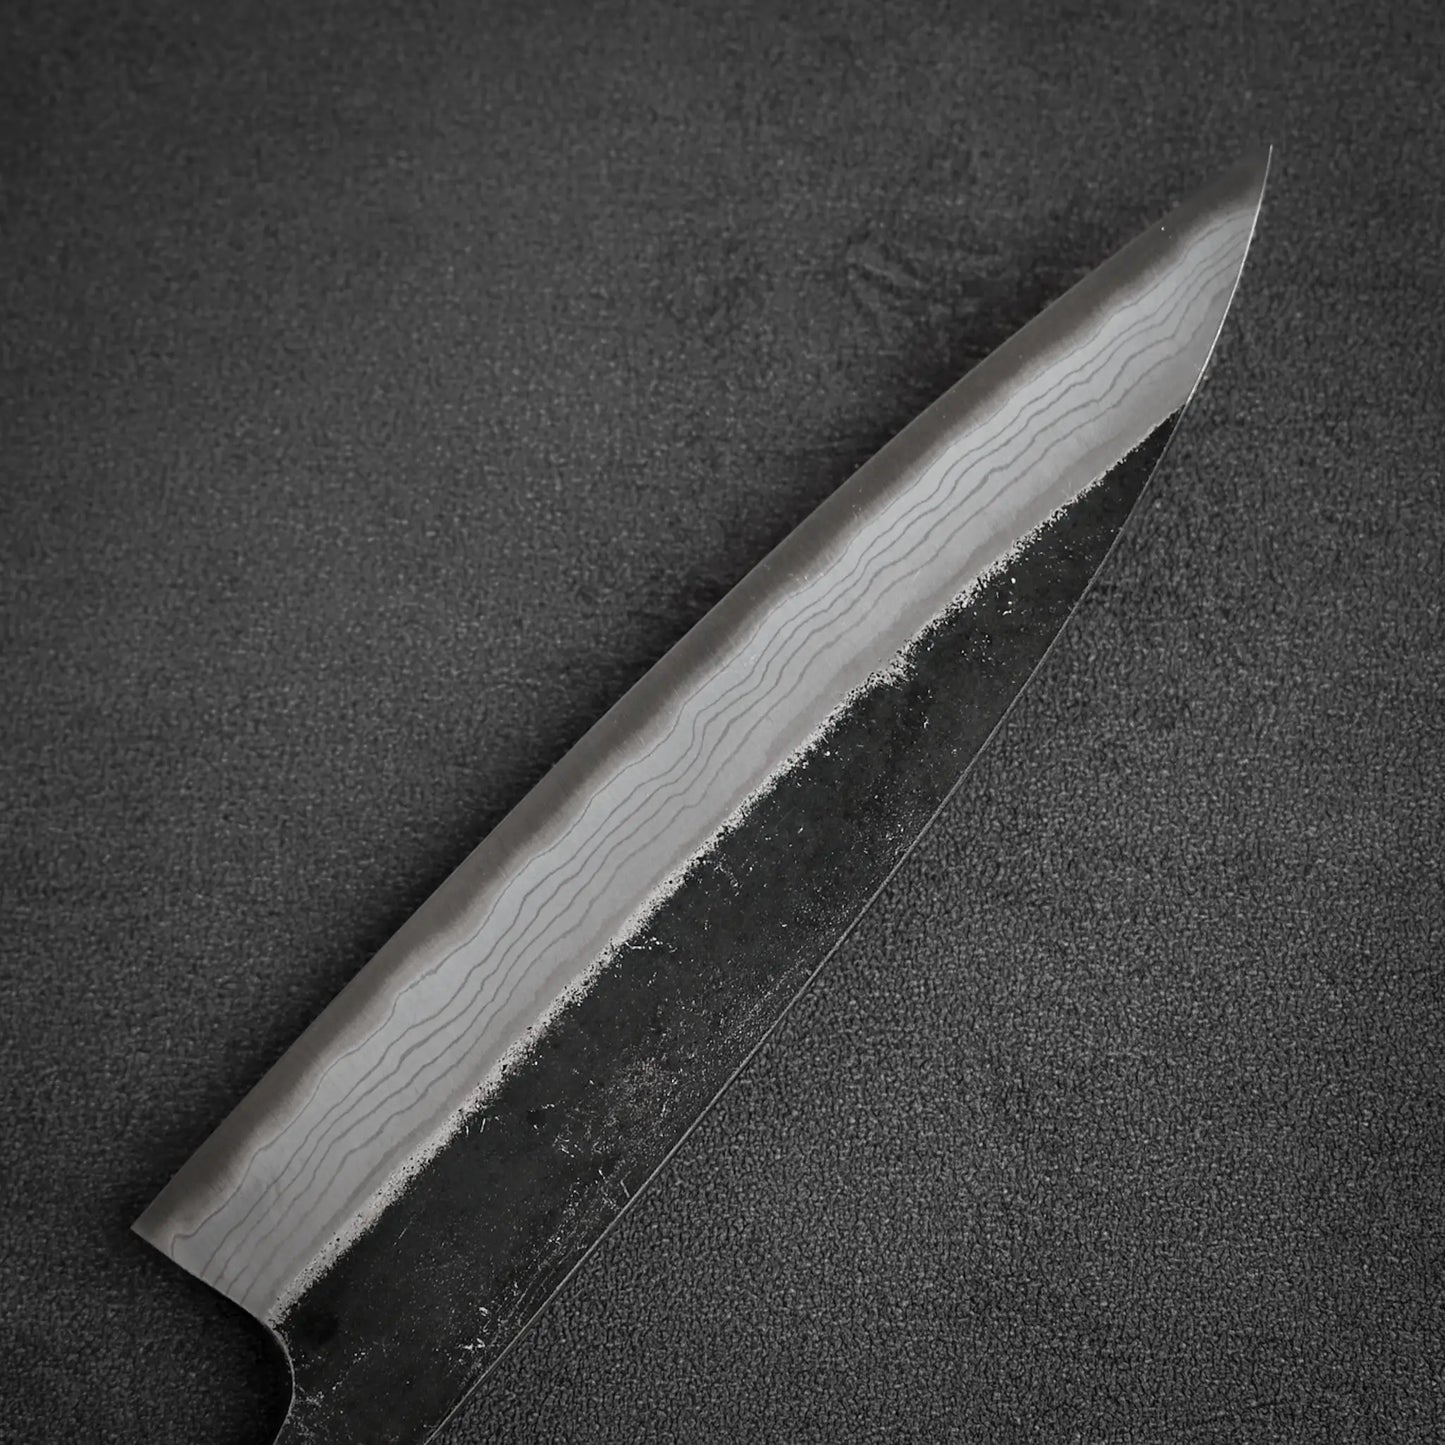 Hatsukokoro Kumokage kurouchi damascus aogami#2 petty knife 150mm